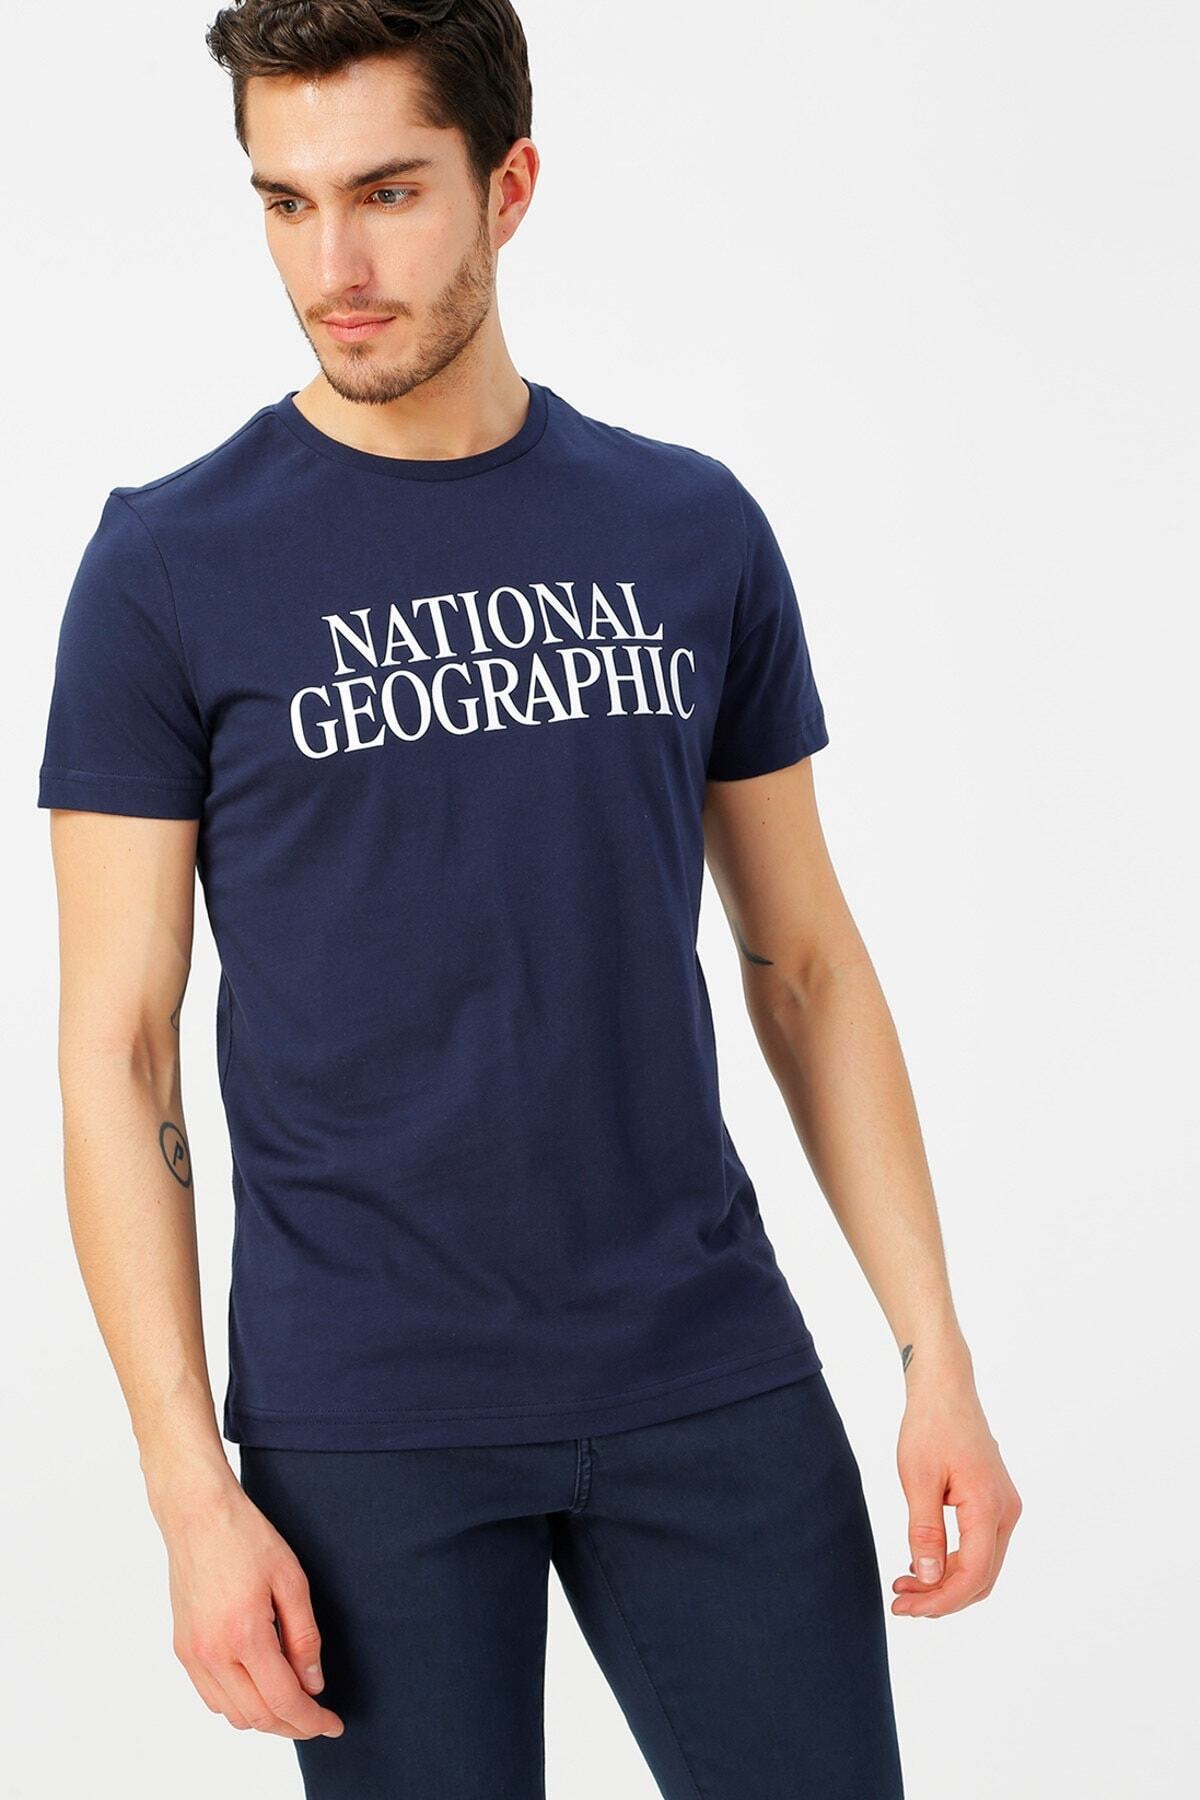 NATIONAL GEOGRAPHIC Tişört